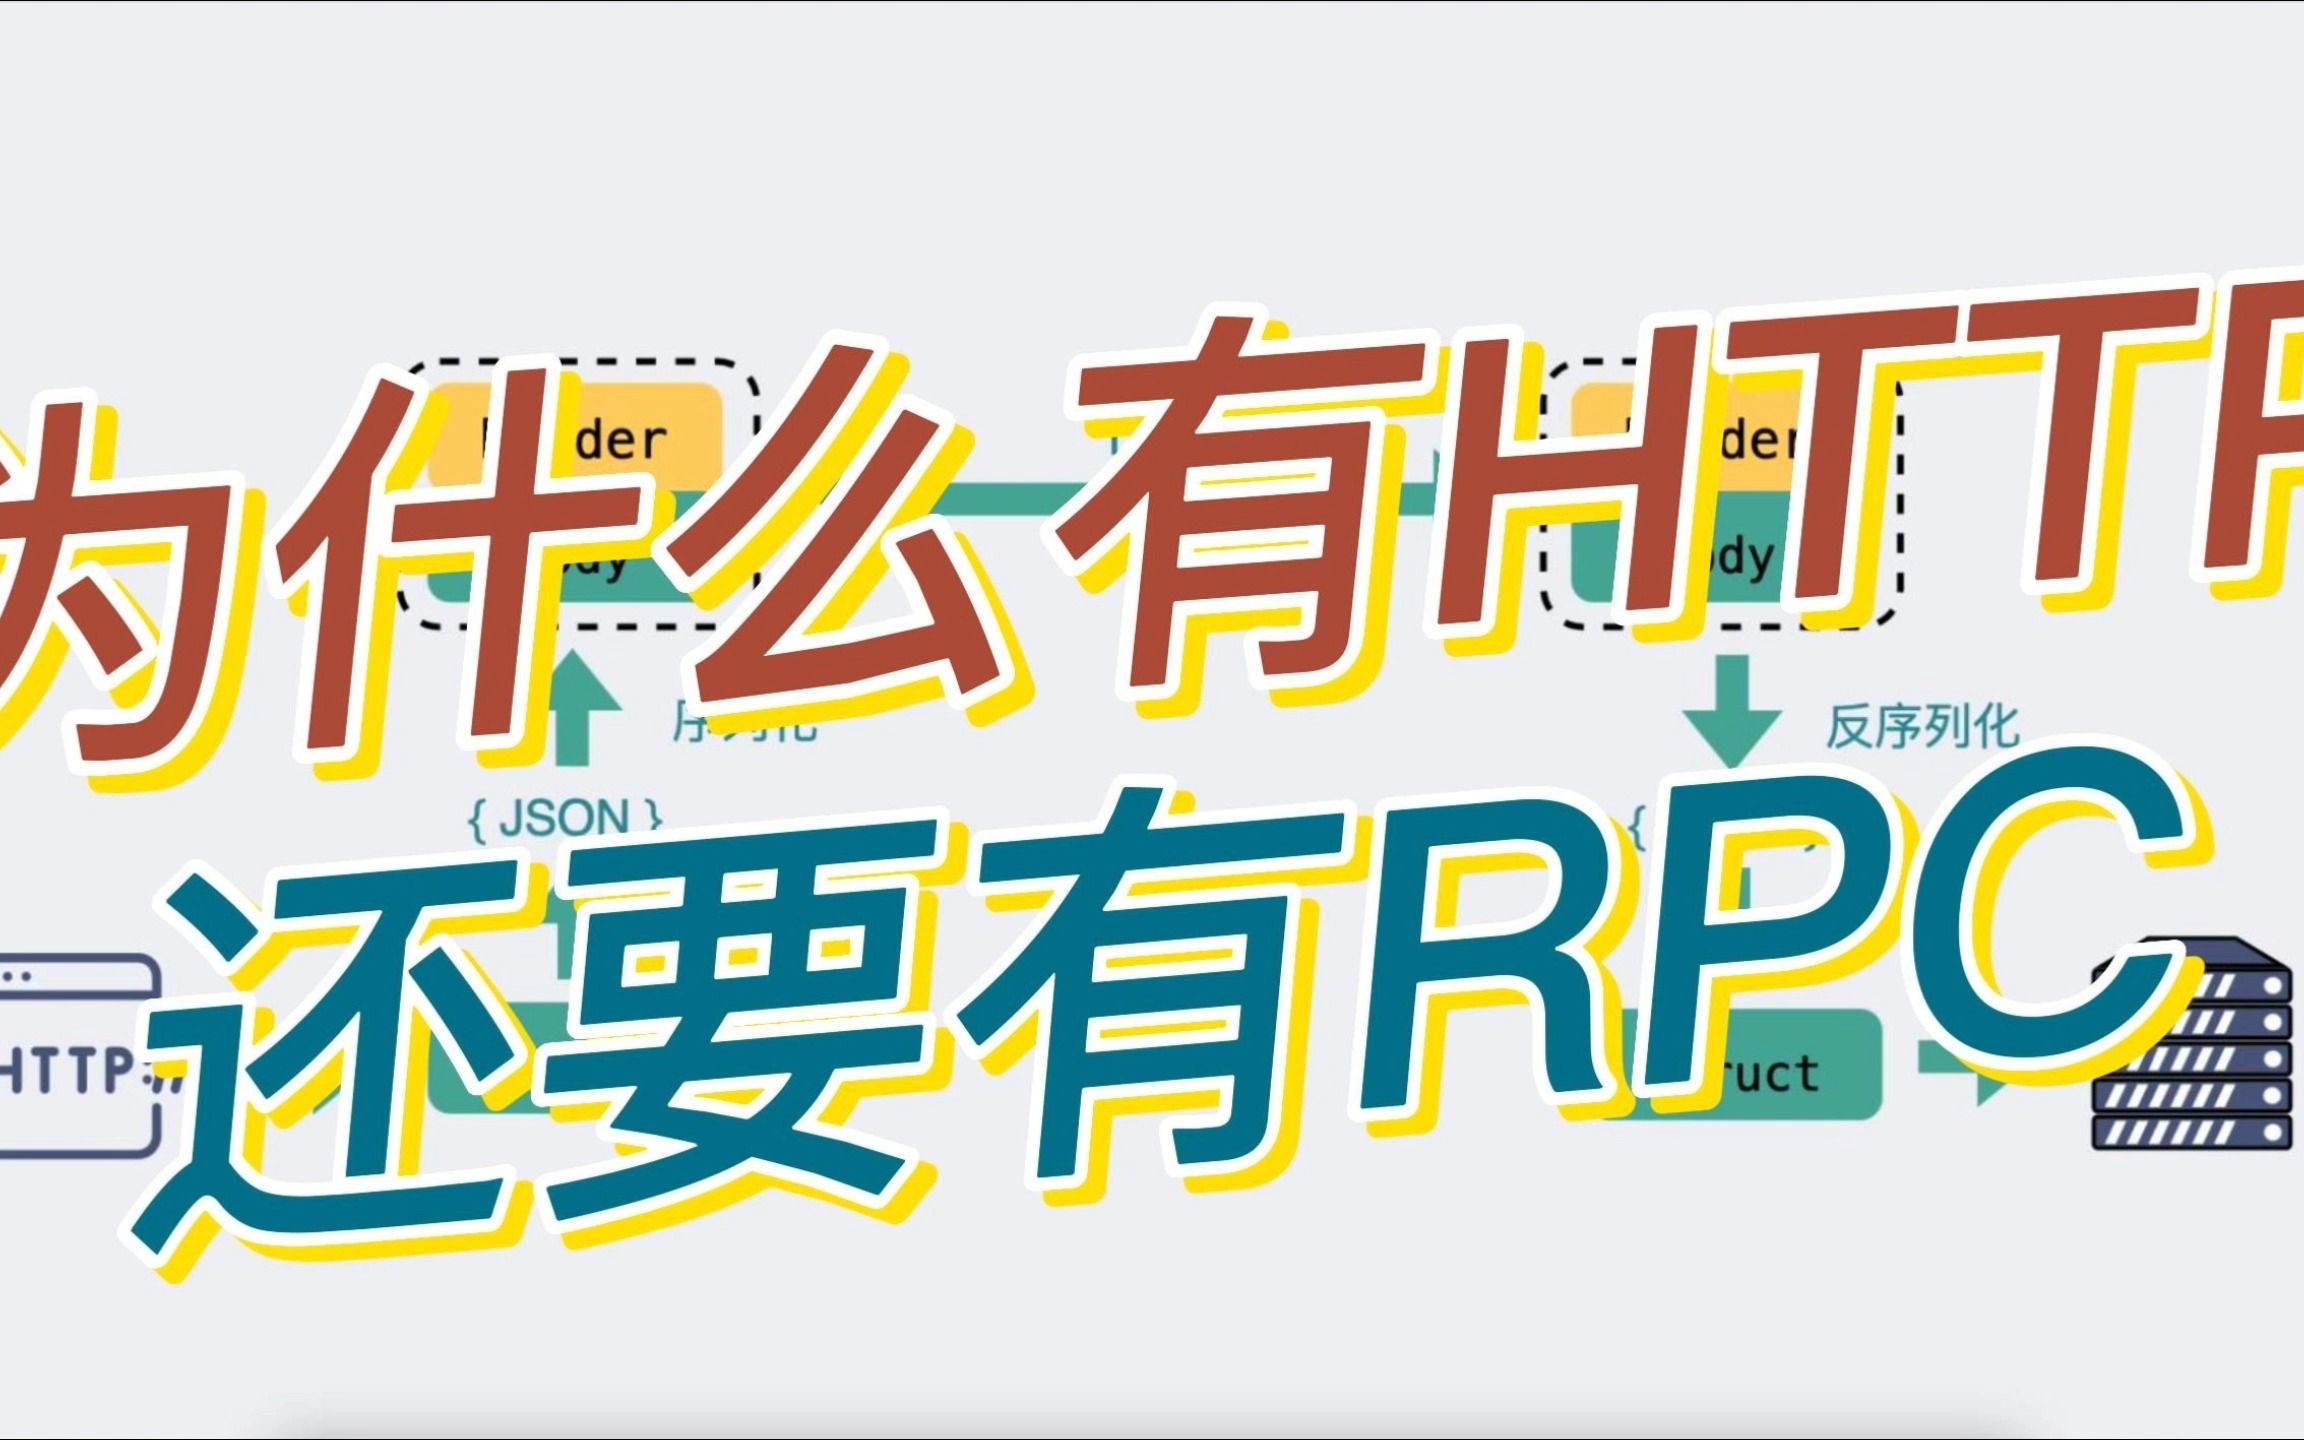 RPC是什么？HTTP是什么？RPC和HTTP有什么区别？